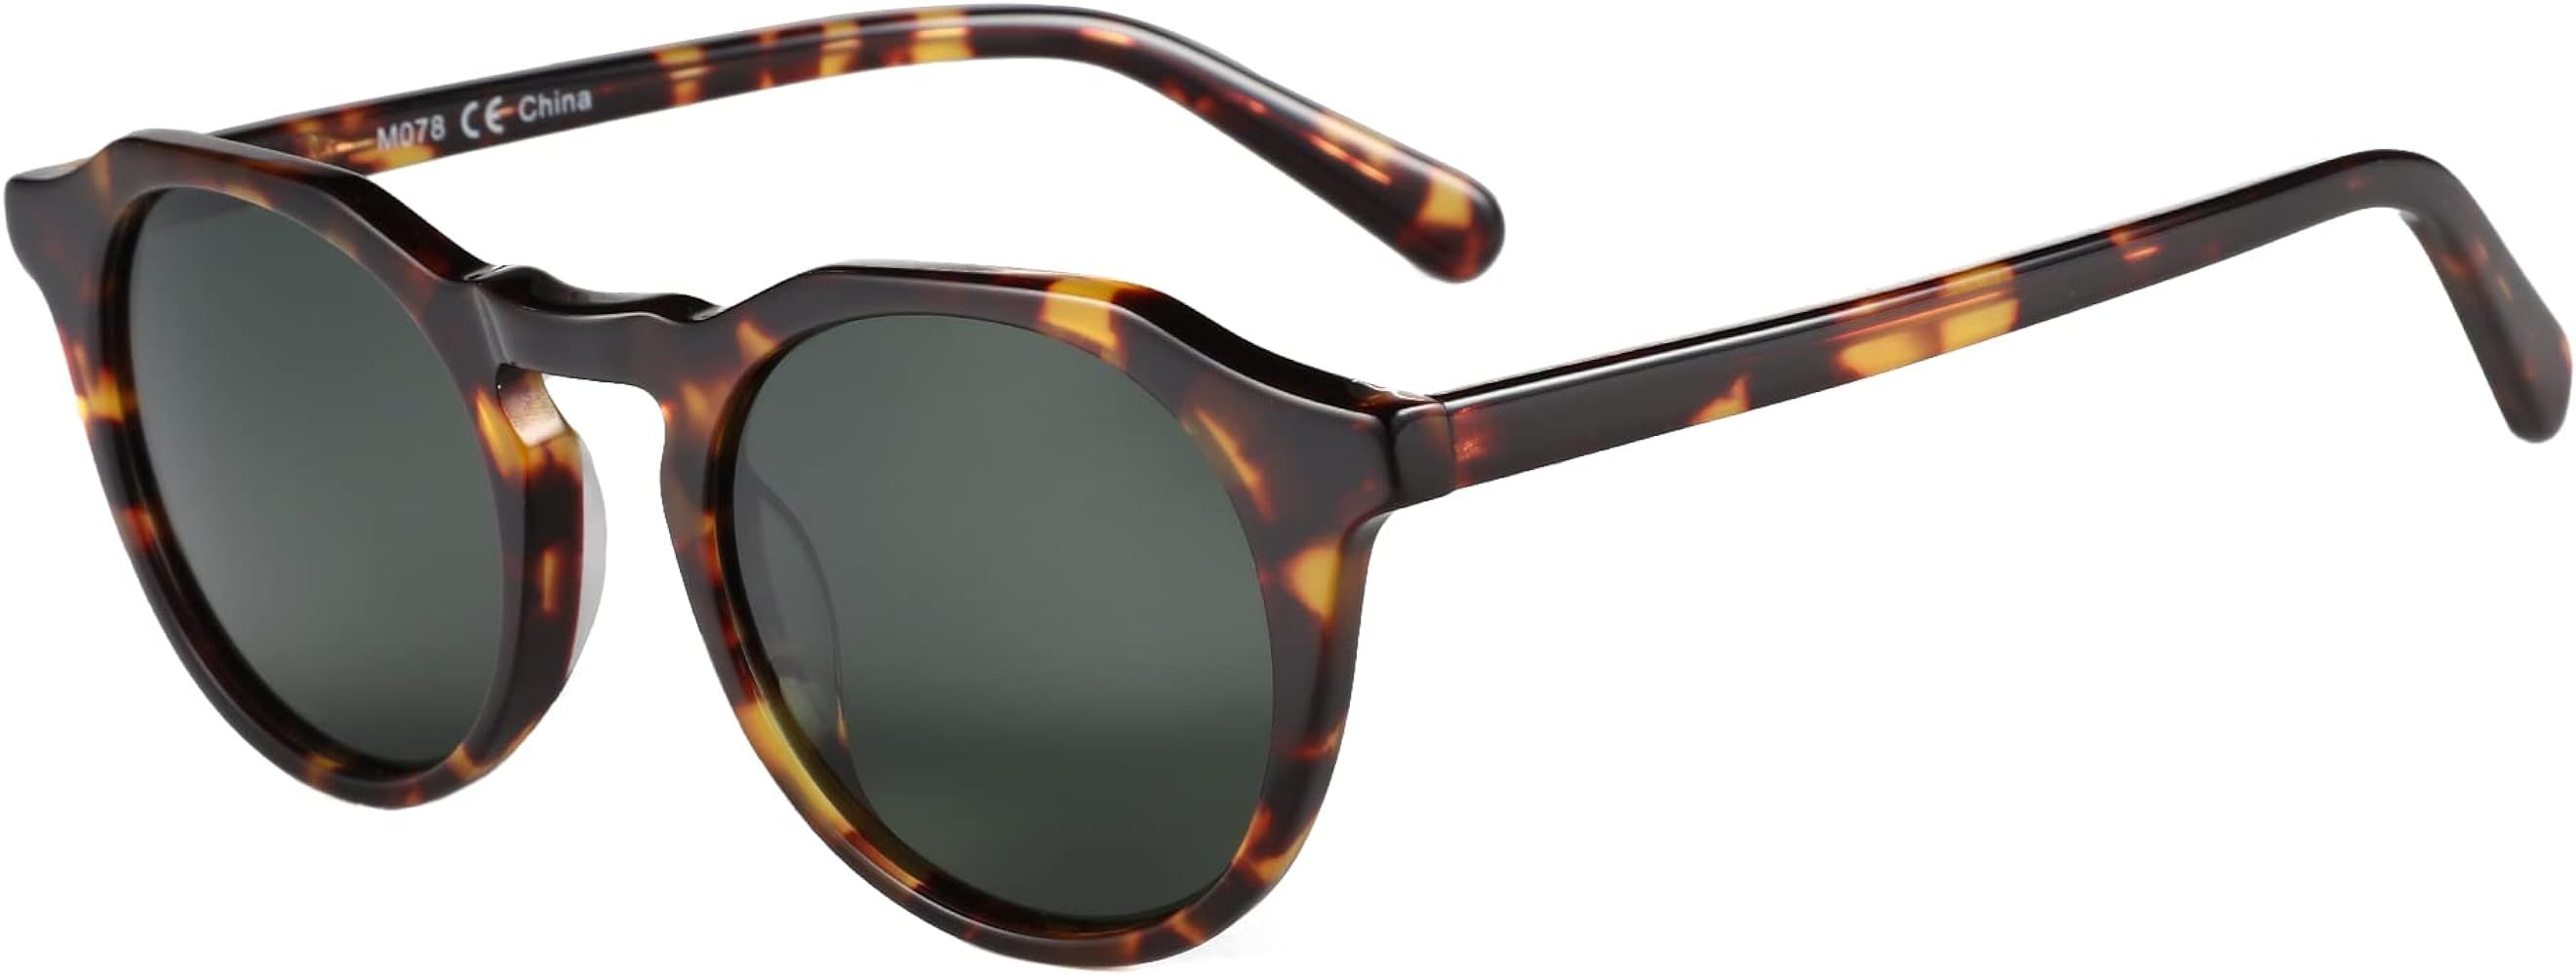 Vintage Round Polarized Sunglasses for Men Women UV400 Protection | Amazon (US)